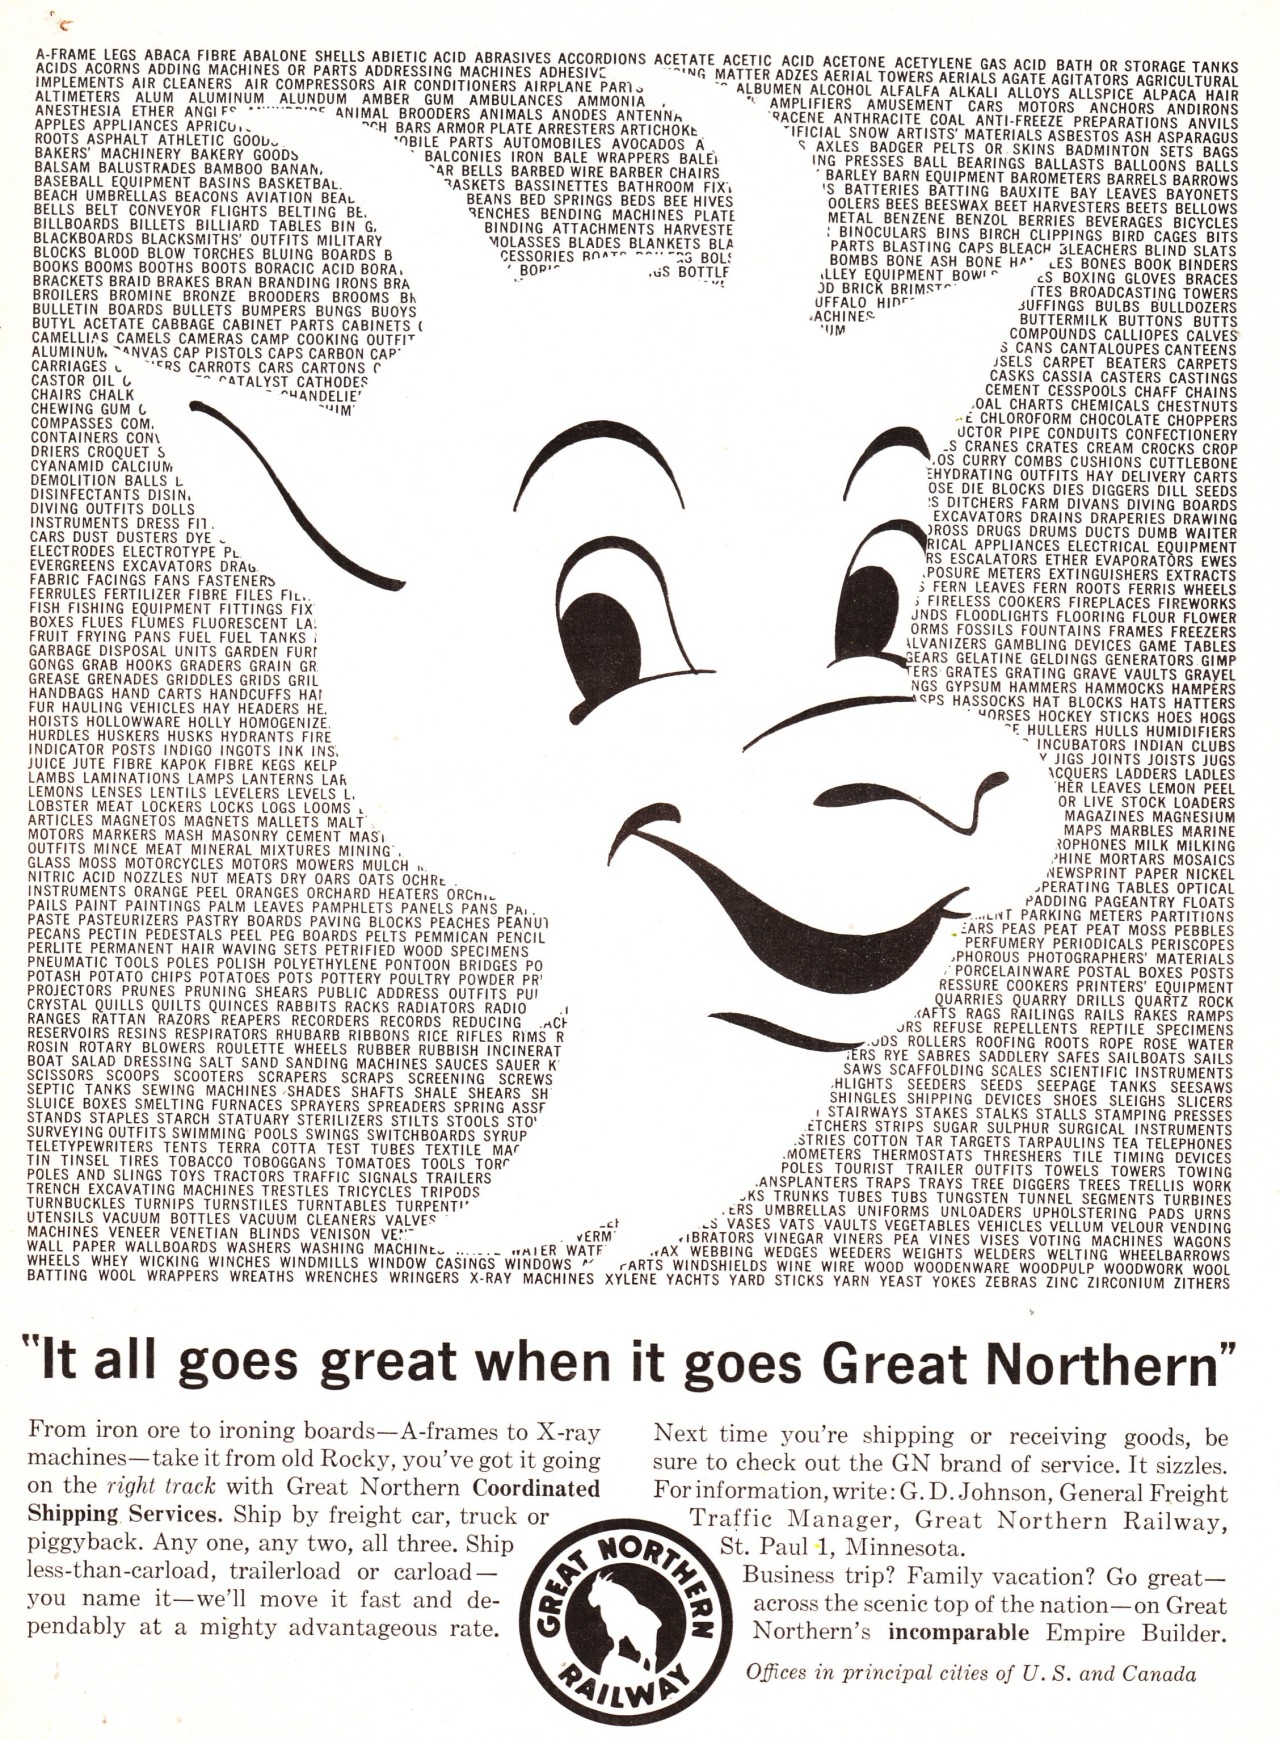 Great Northern Railway - 1961